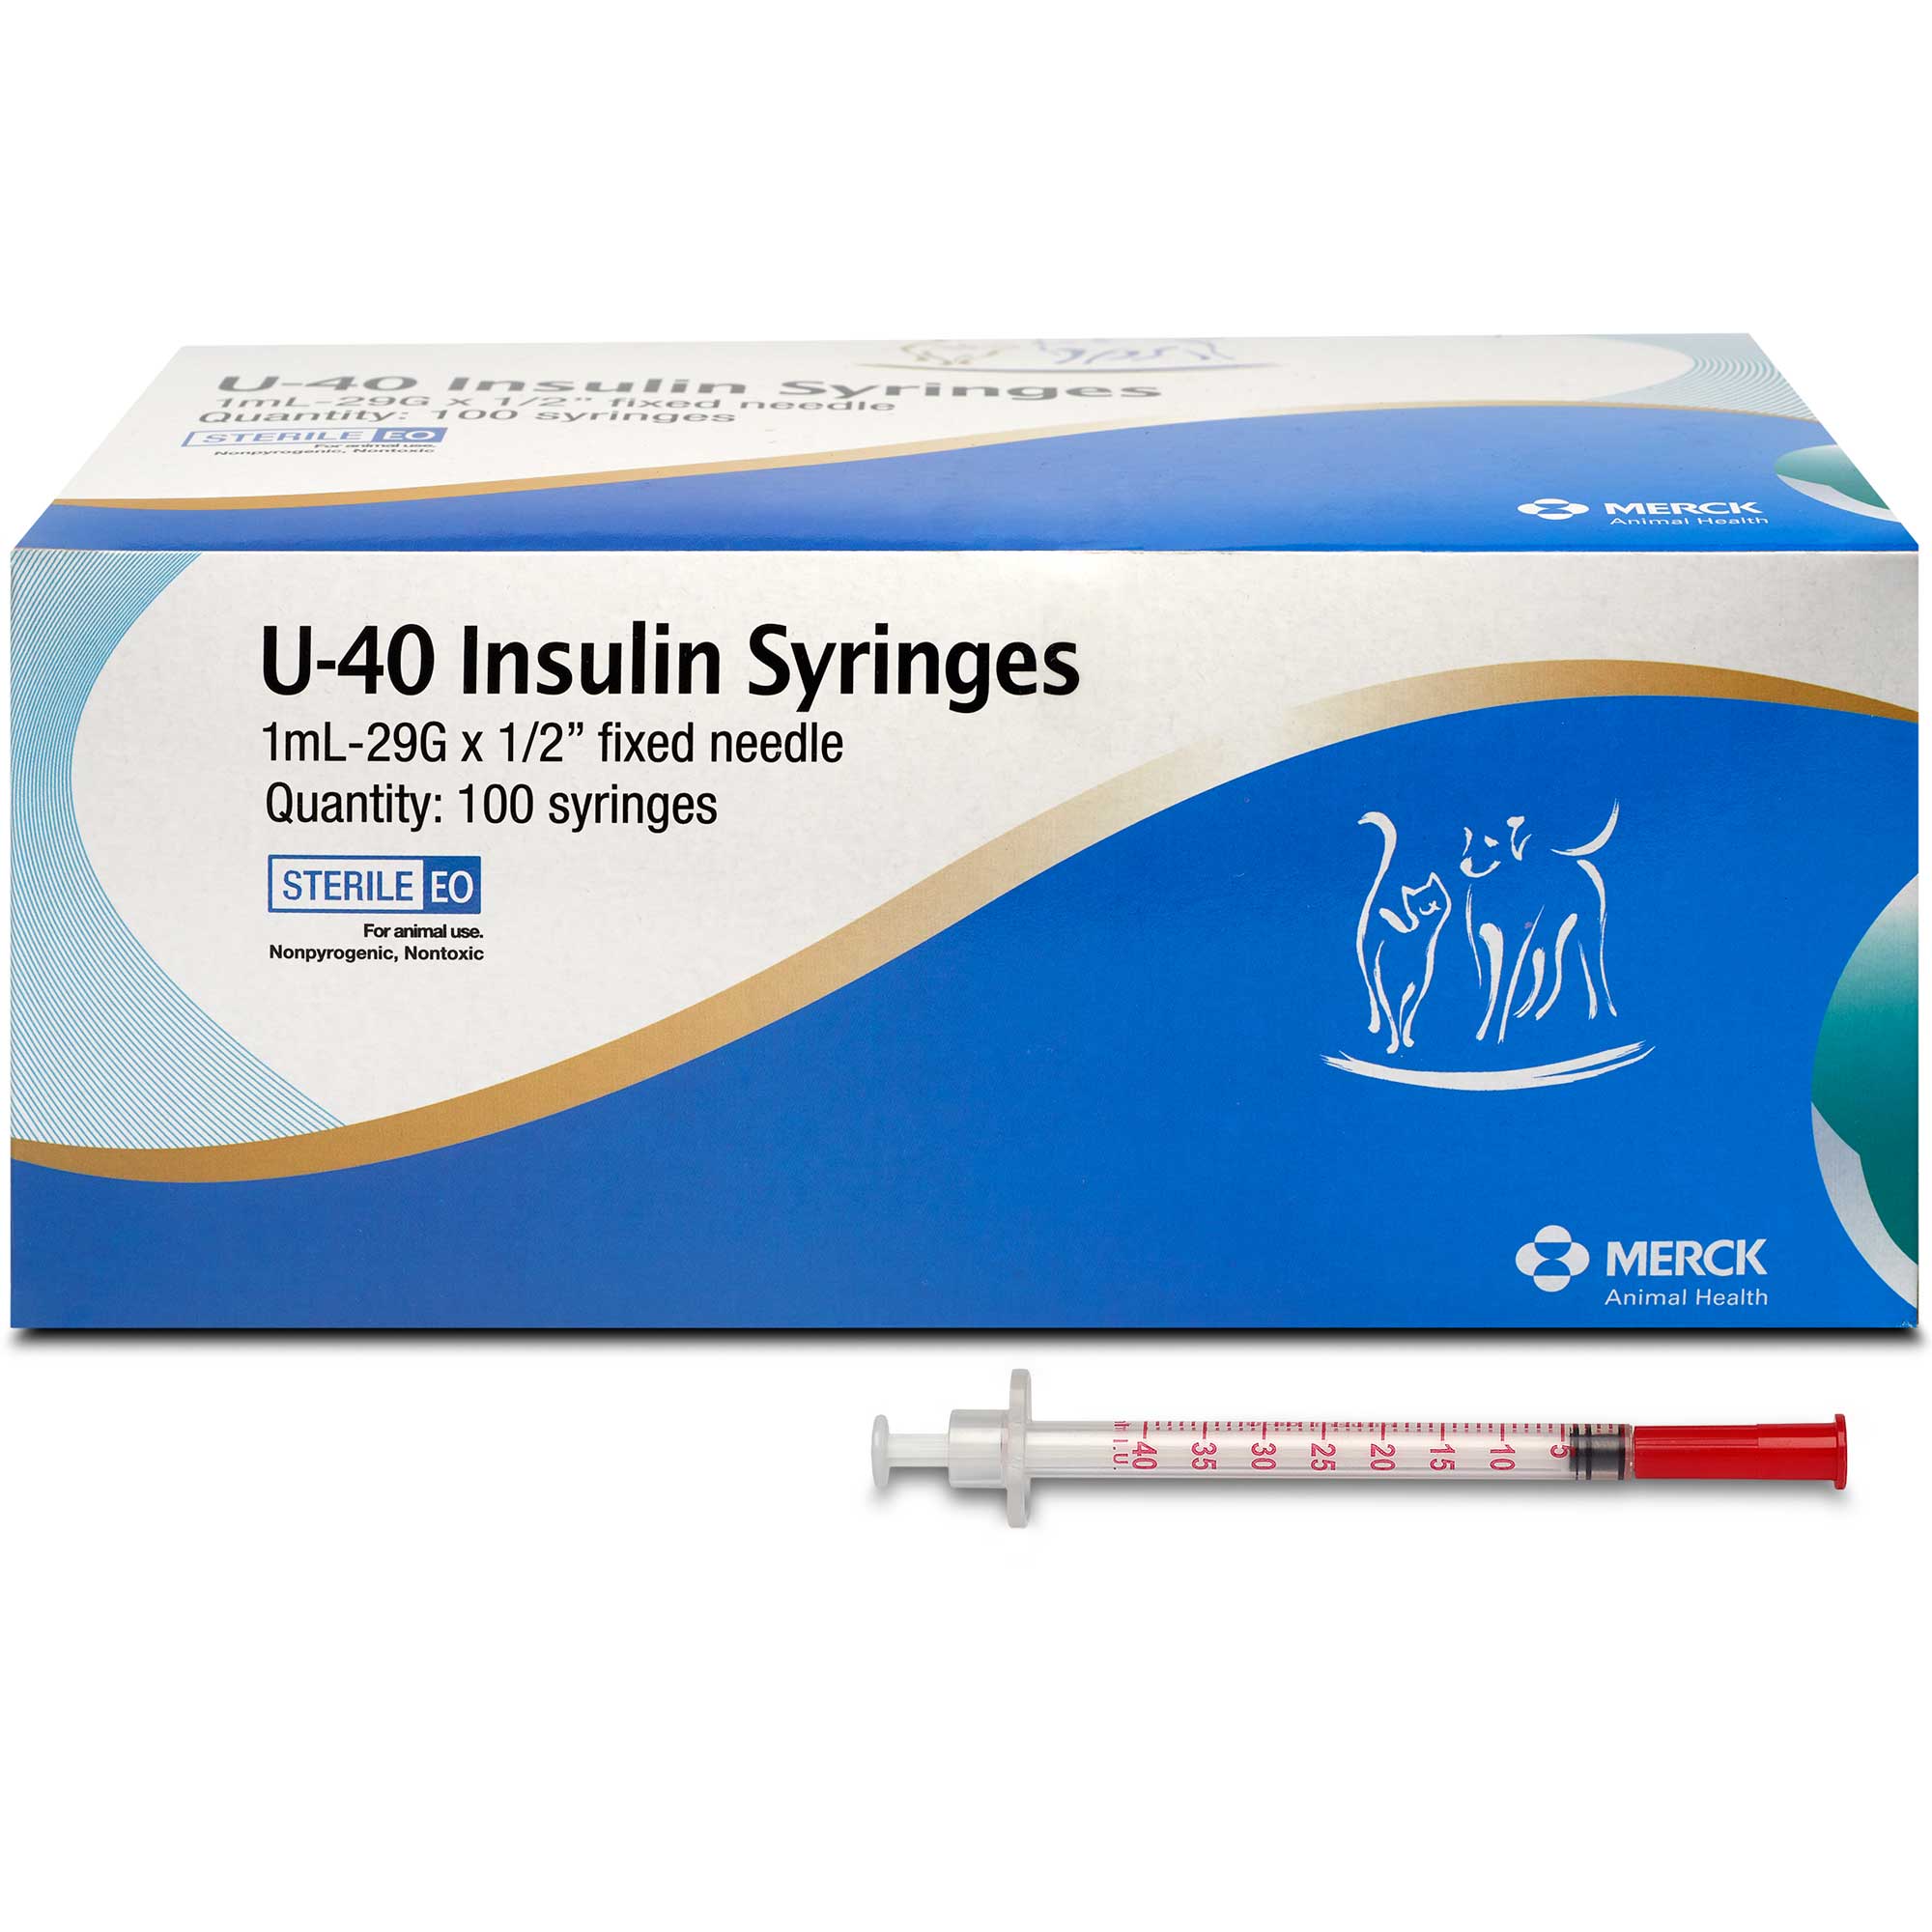 Insulin U-40 Syringes Usage